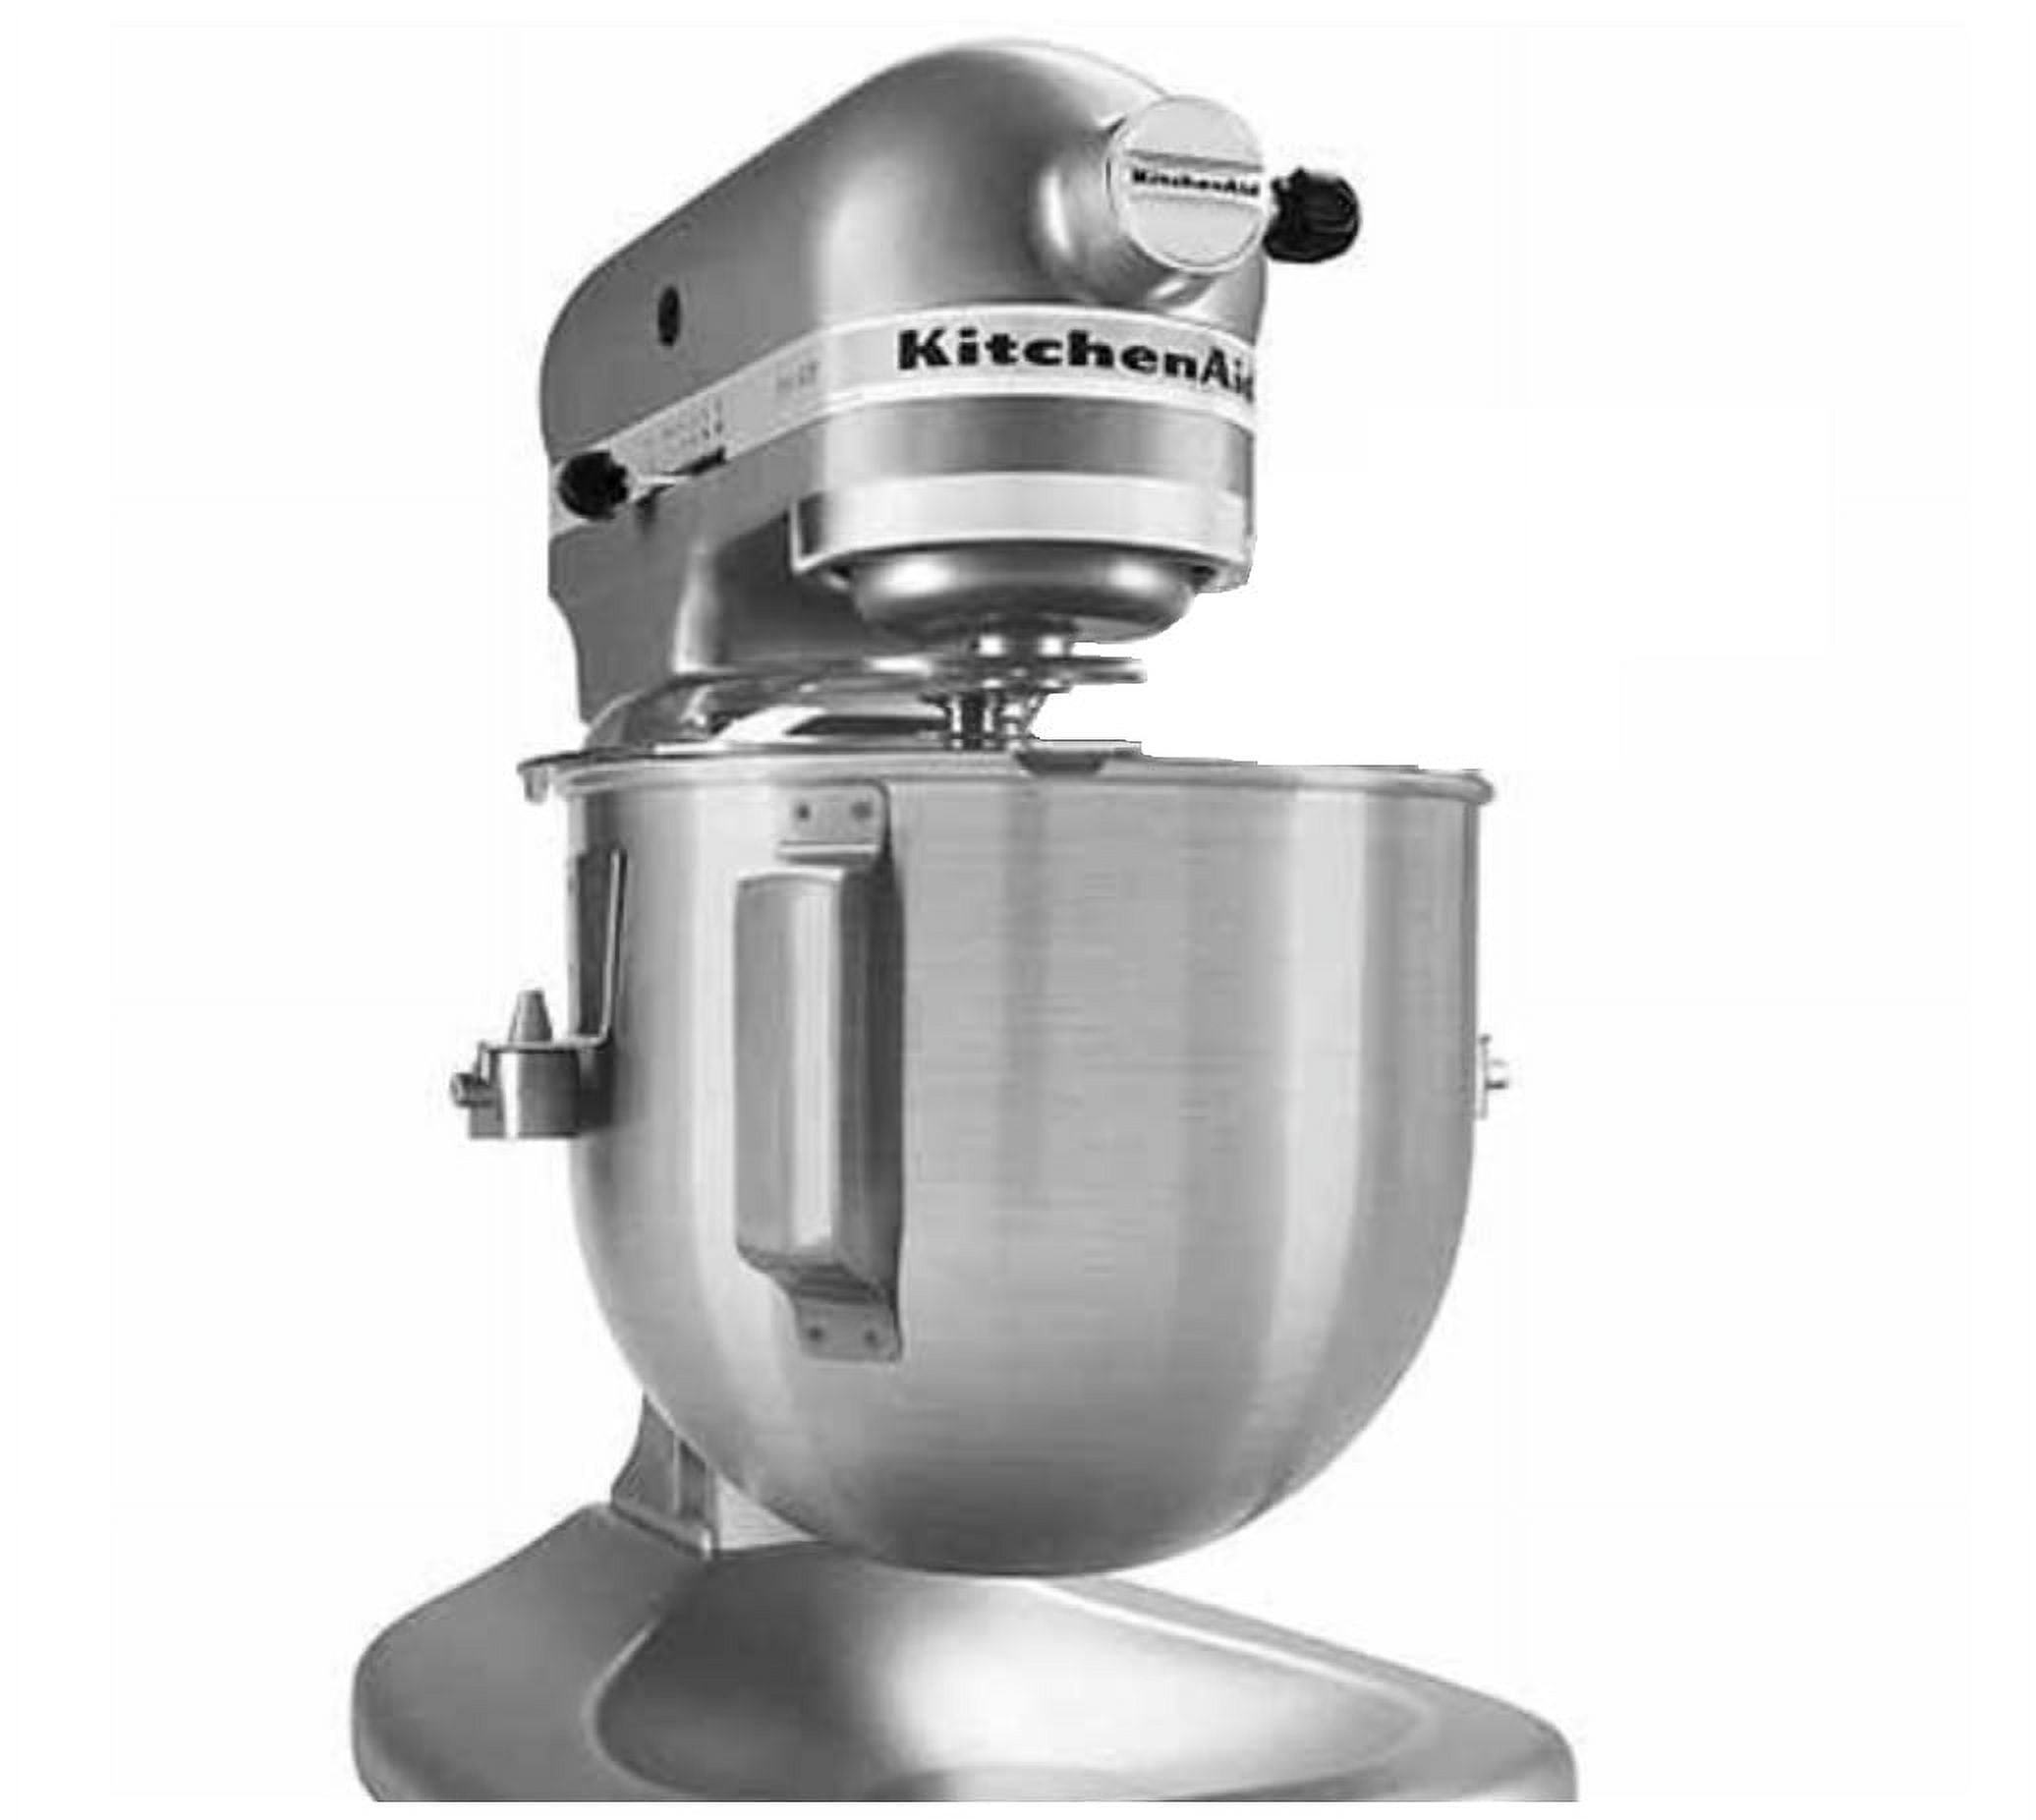 KitchenAid Pro 500 Series 5 Quart Bowl-Lift Stand Mixer, Silver (Used)